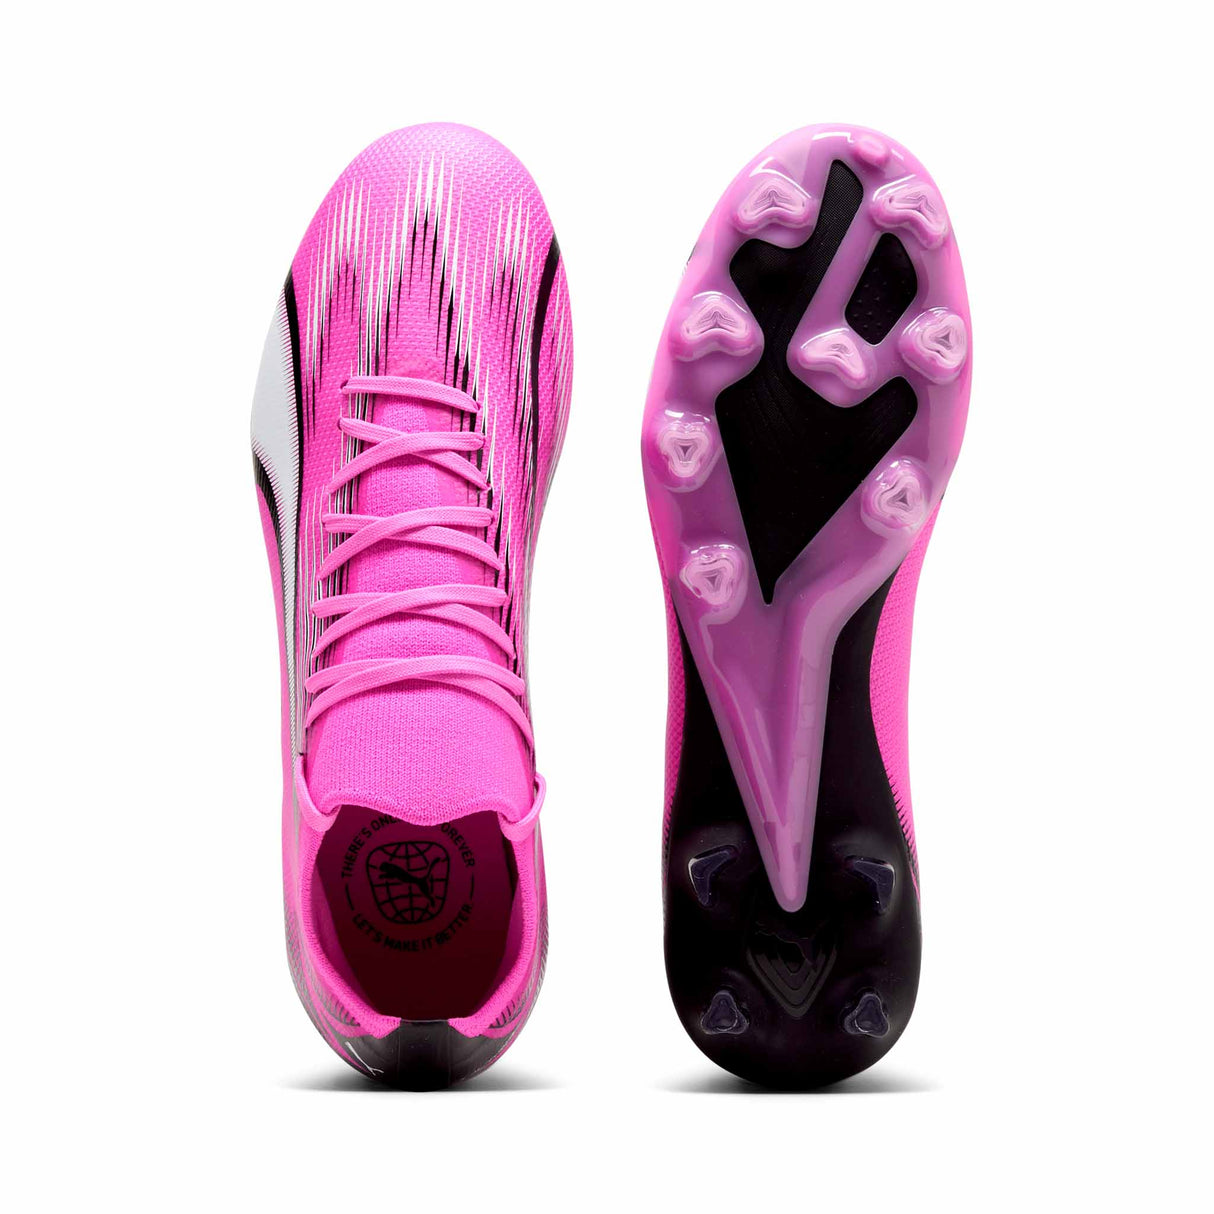 Puma Ultra Match FG/AG Wn's chaussures de soccer a crampons pour femme - Poison Pink / Puma White / Puma Black